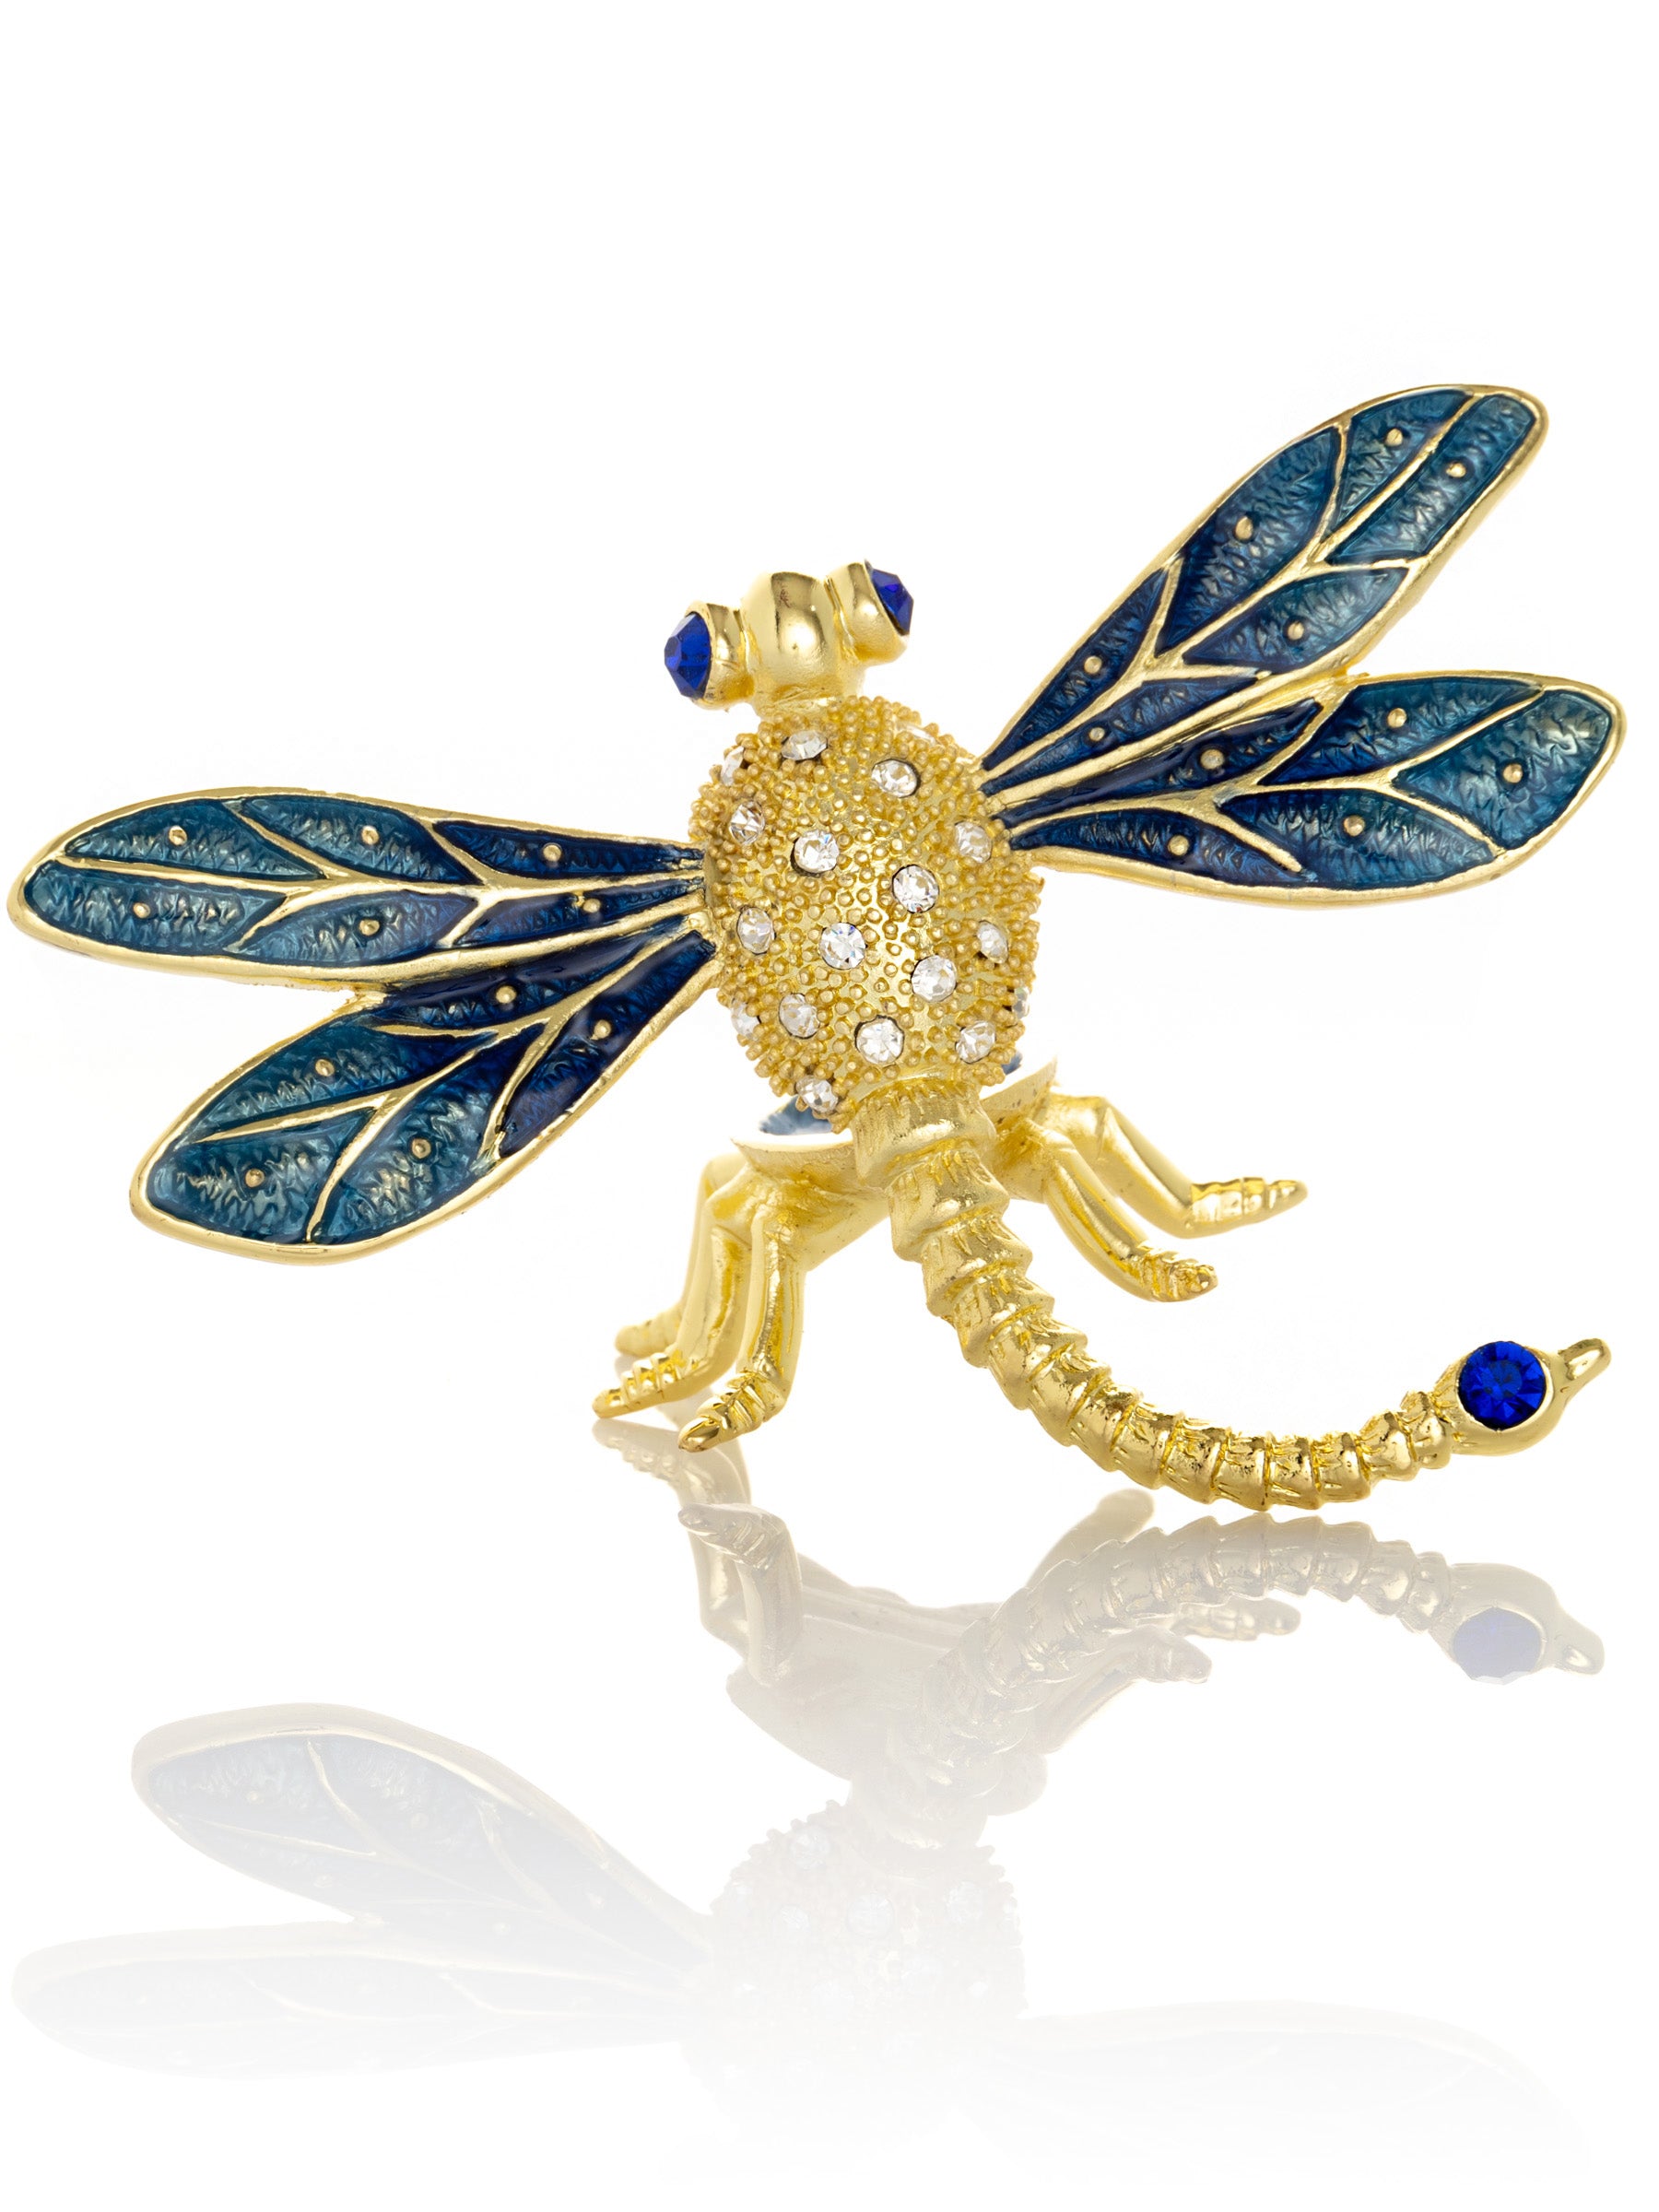 Golden Blue Dragonfly